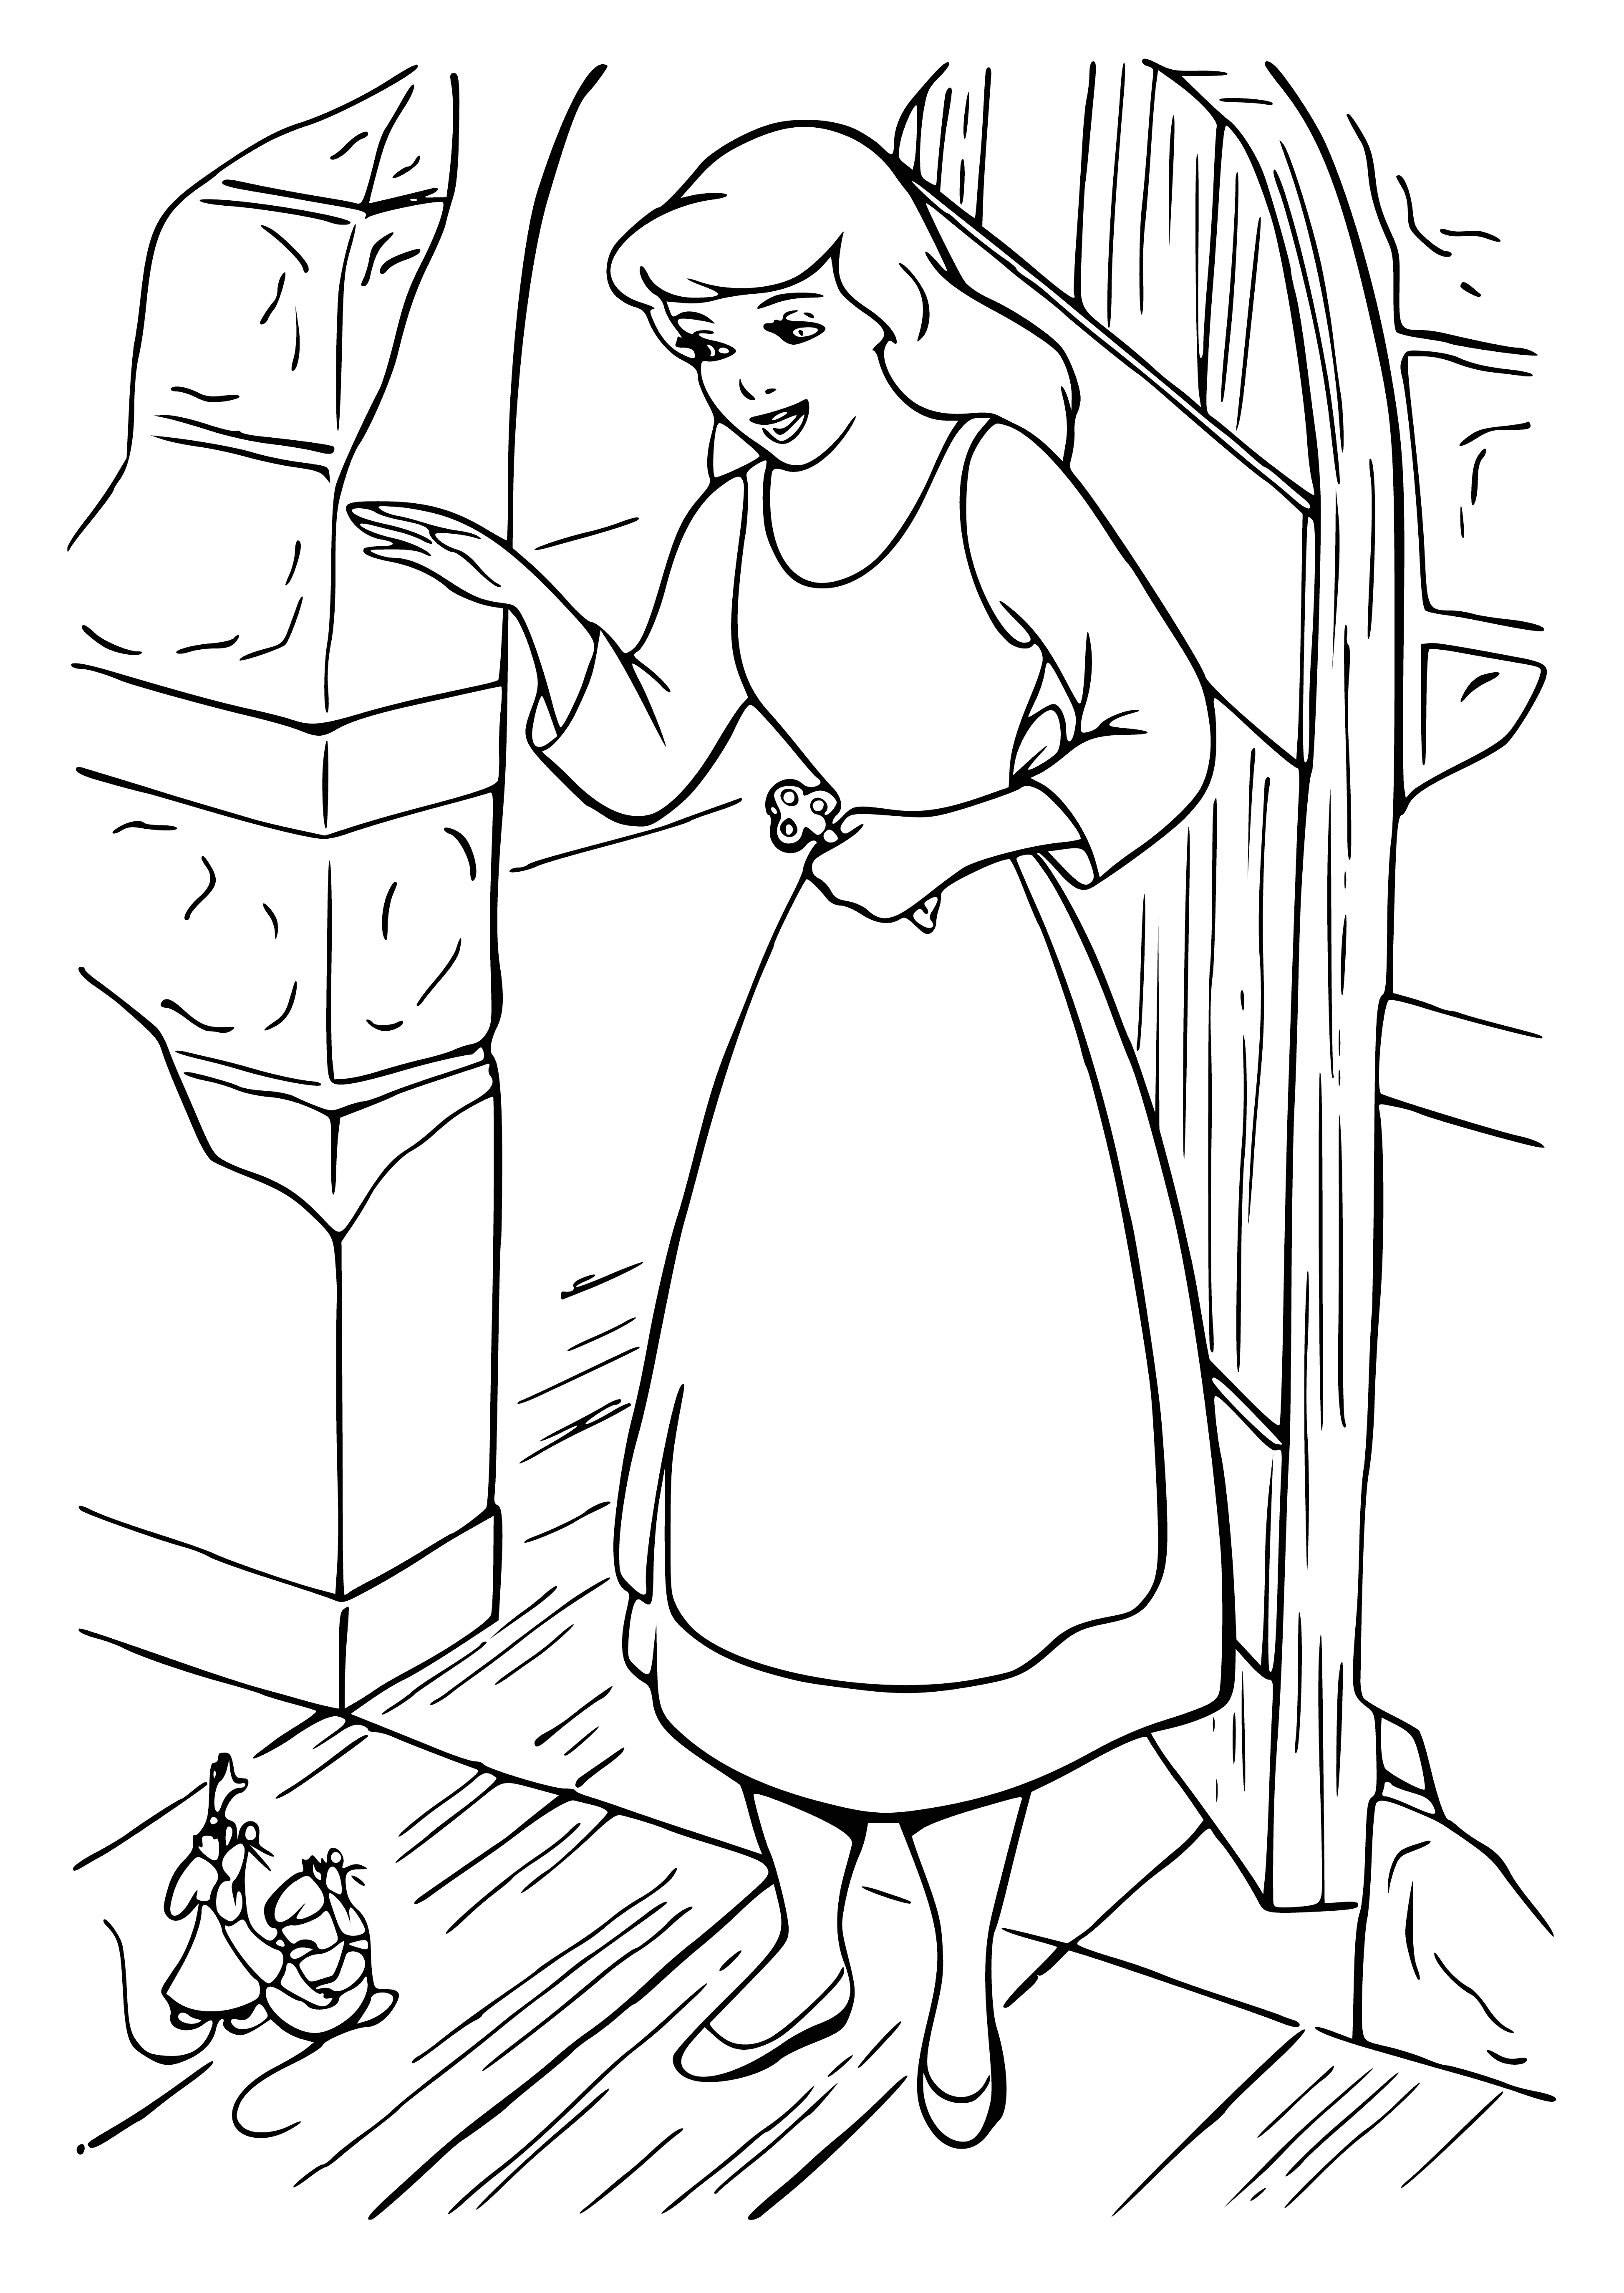 Cinderella freed coloring page